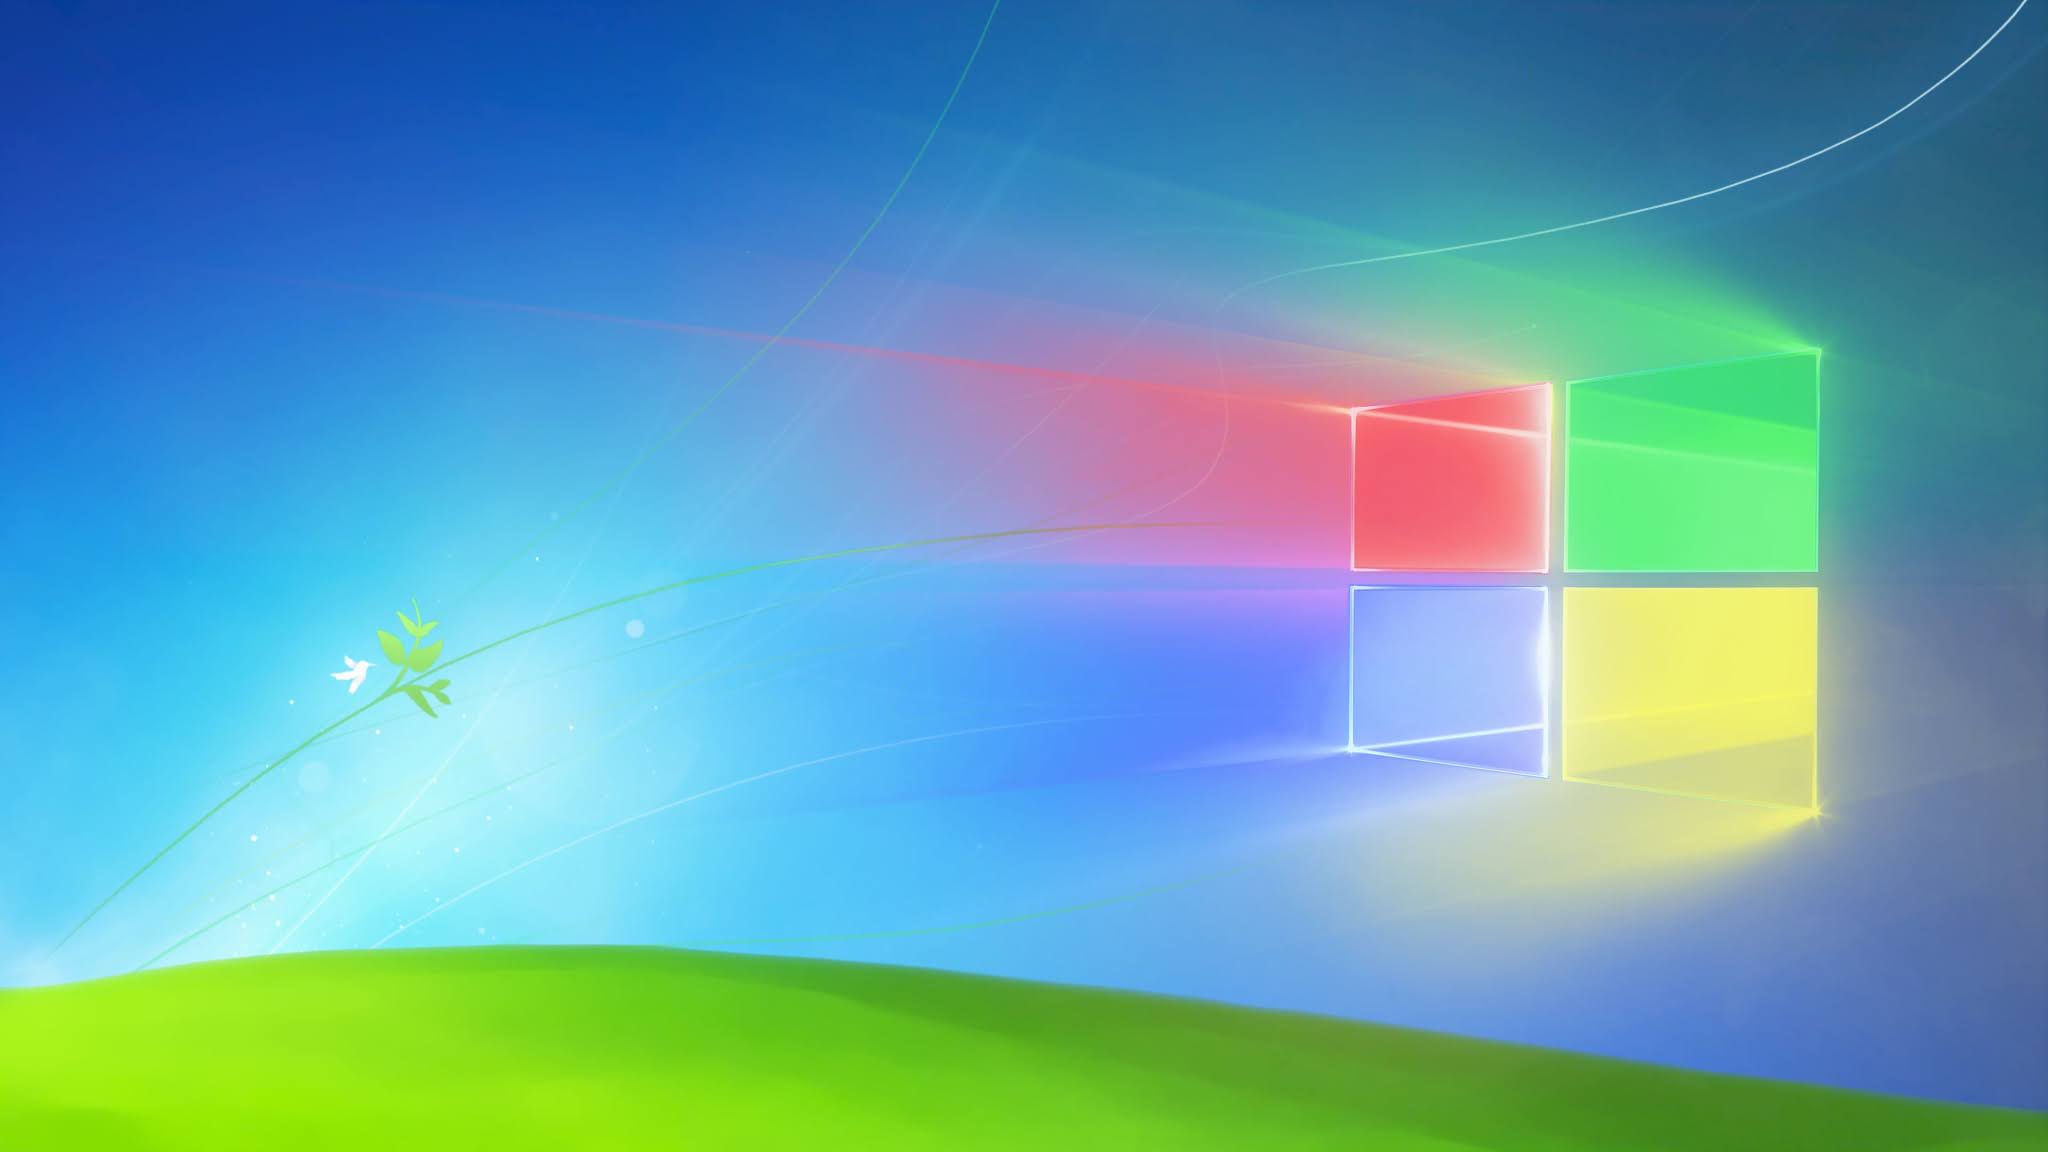 Windows Logo Abstract Digital